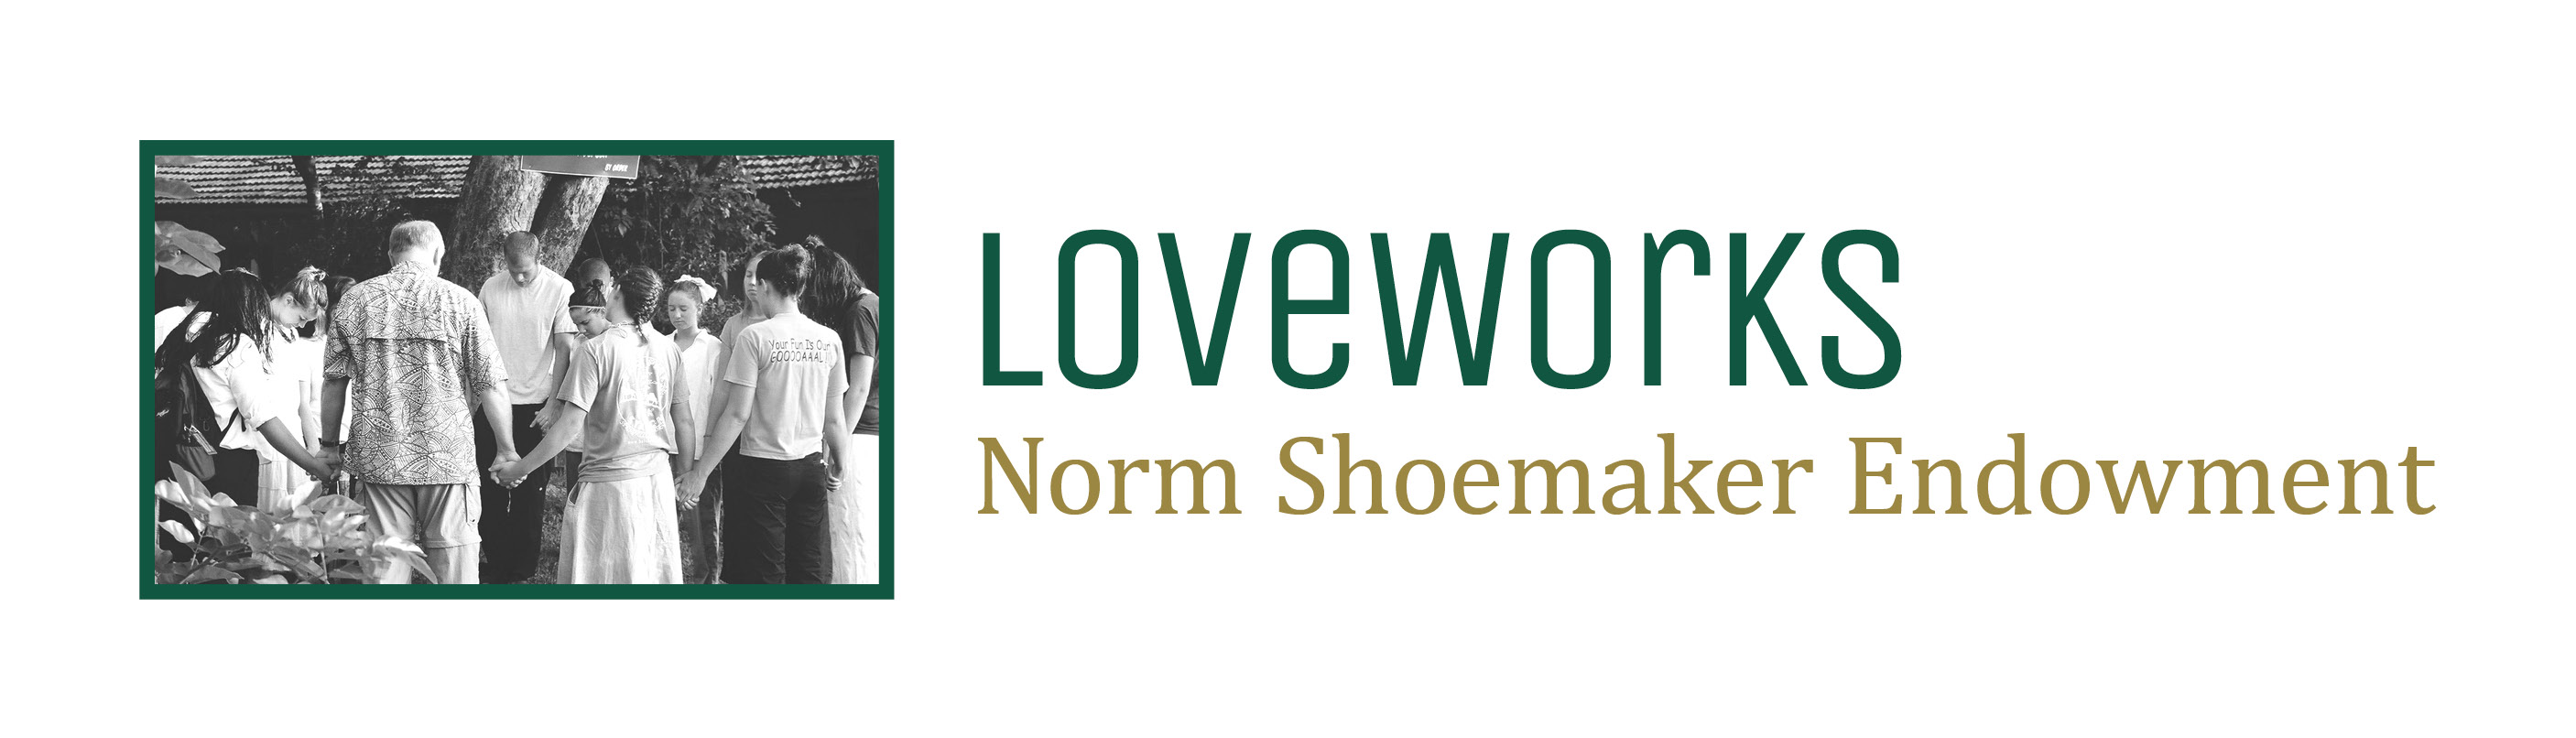 LoveWorks Endowment logo